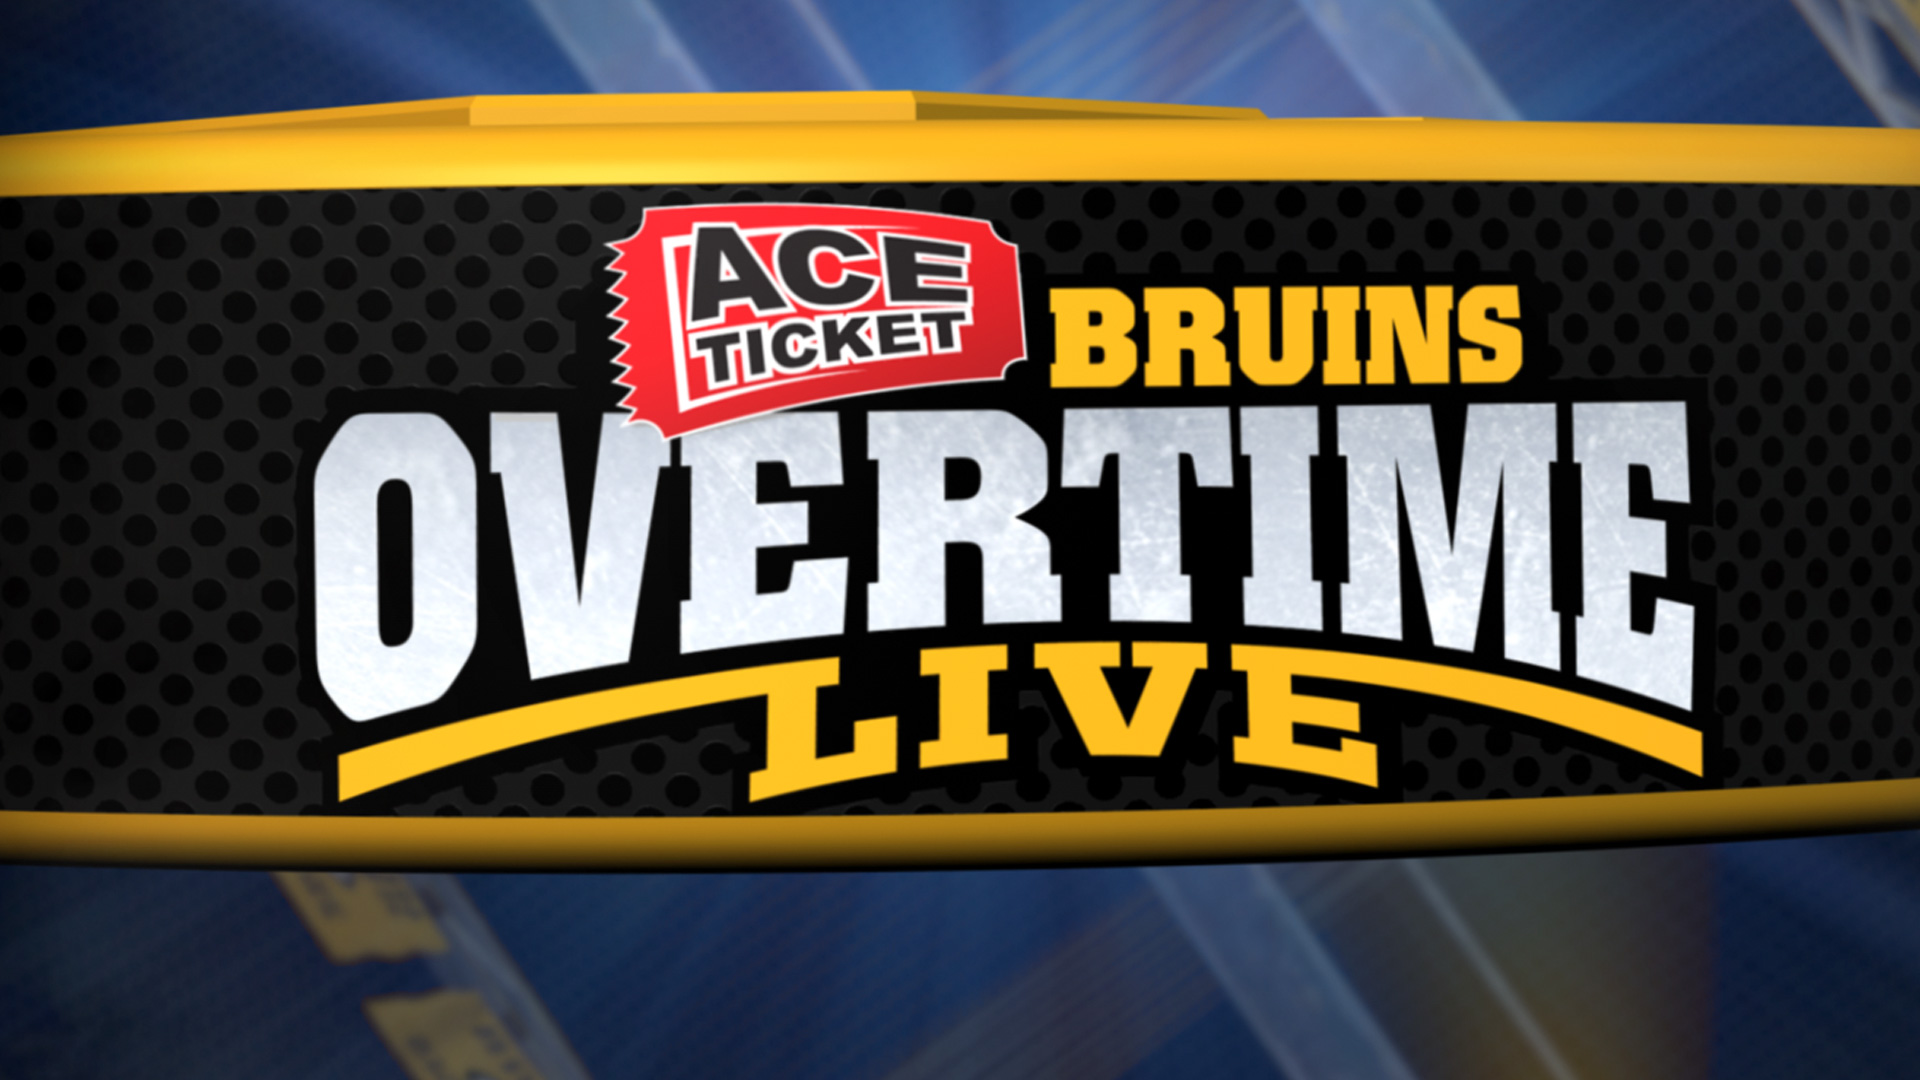 ACE Ticket Bruins Overtime Live